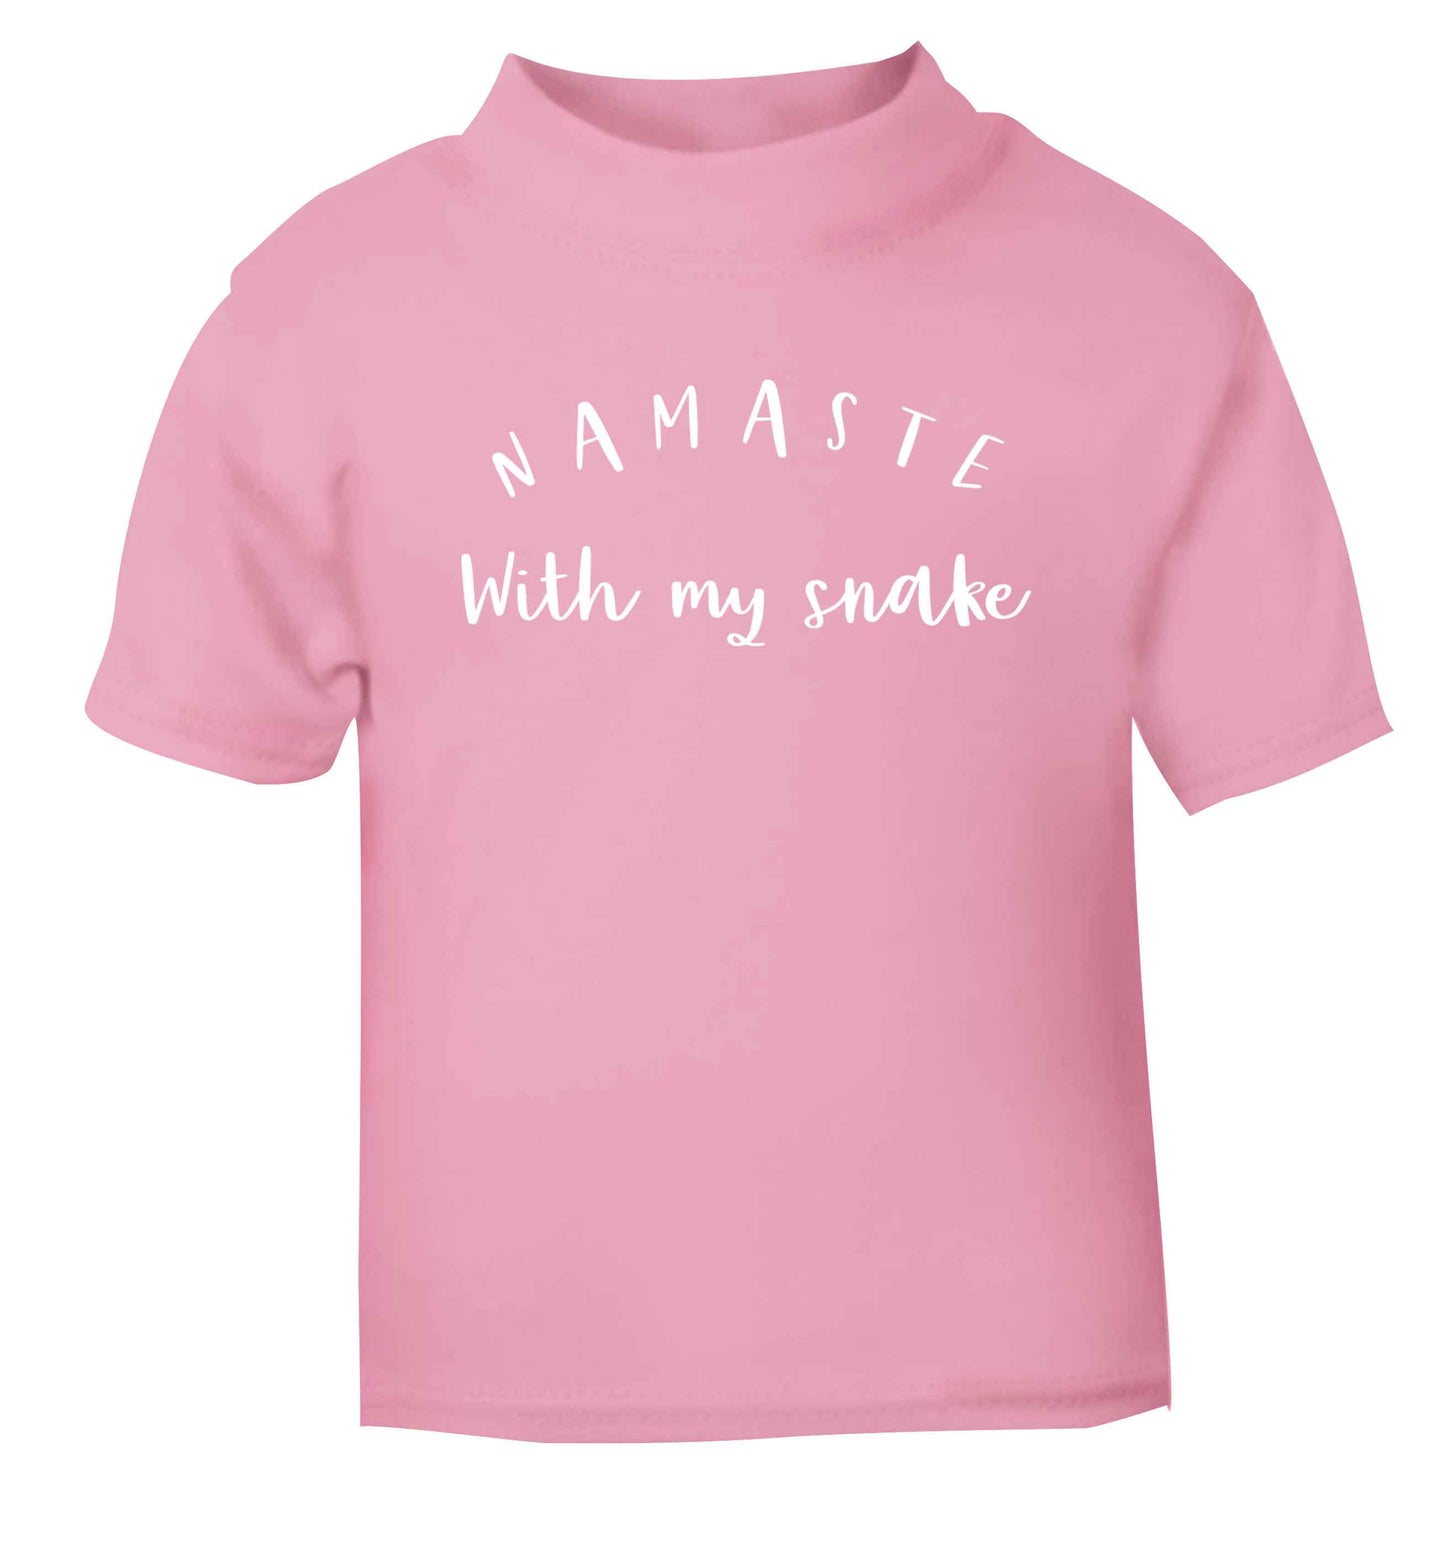 Namaste with my snake light pink Baby Toddler Tshirt 2 Years